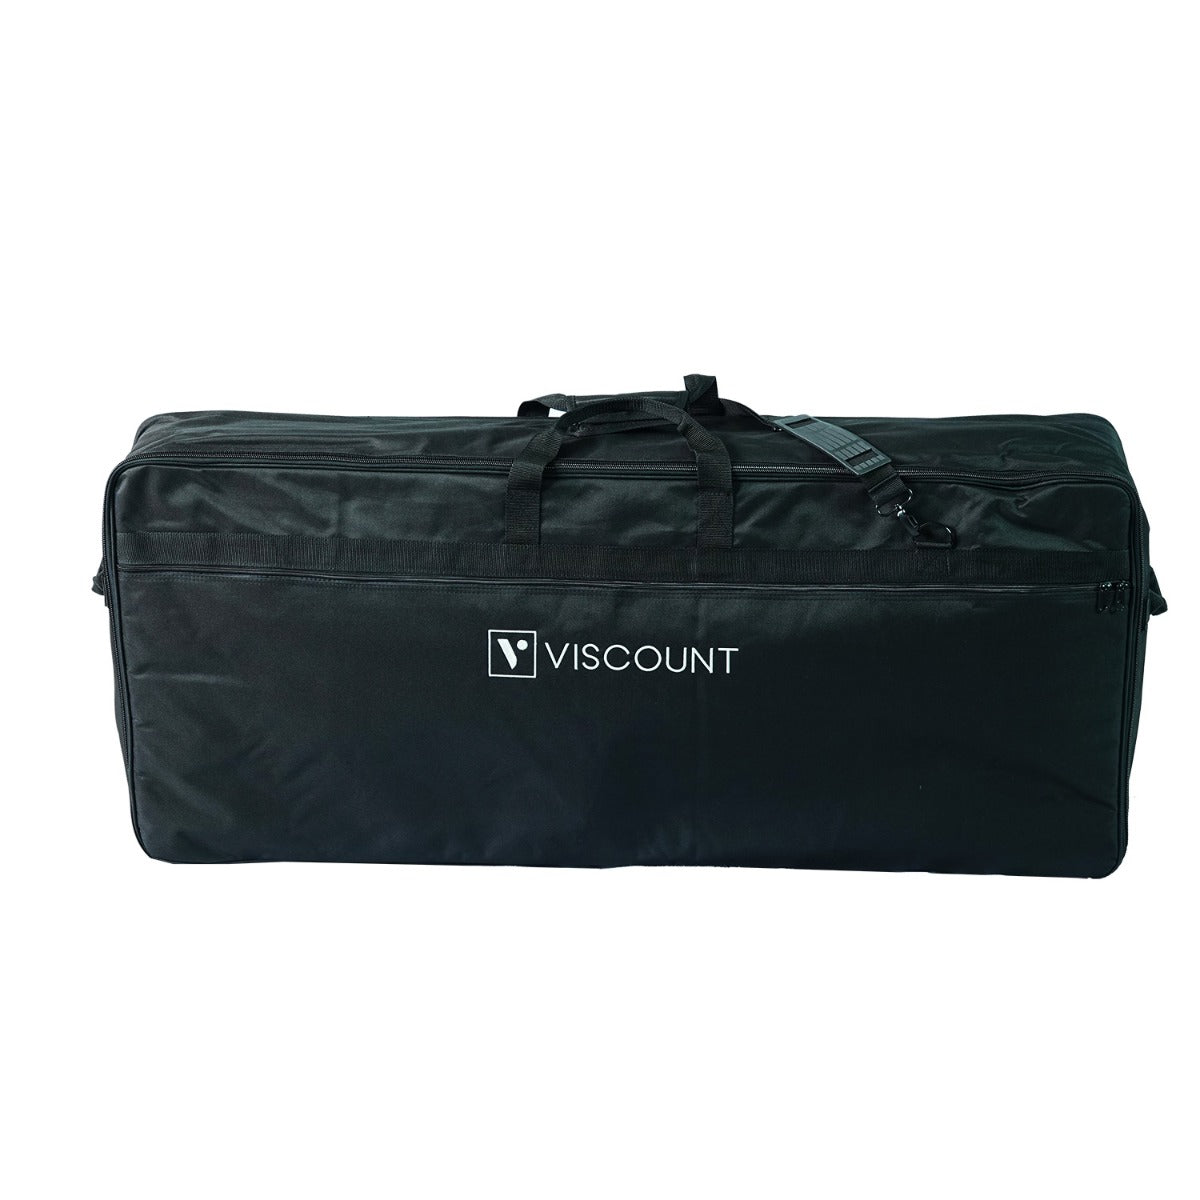 Viscount Legend 70's Compact Transport Bag view 2